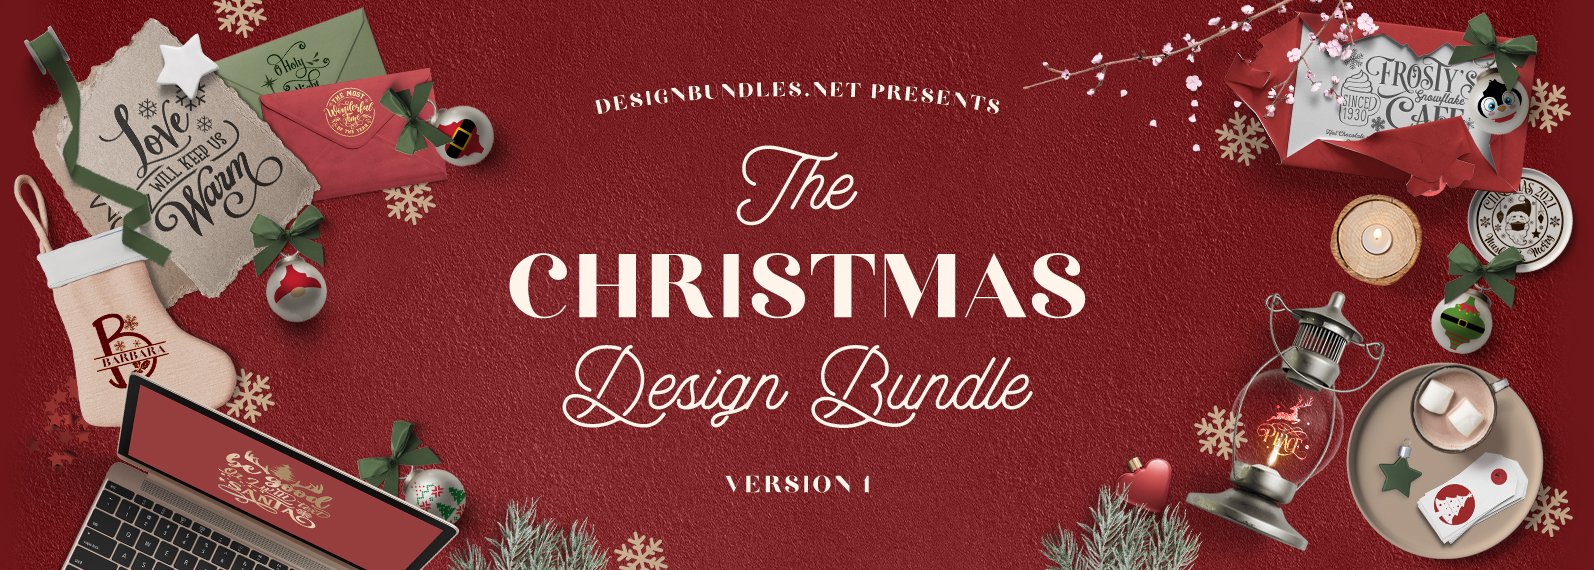 The Christmas Design Bundle 1 Cover